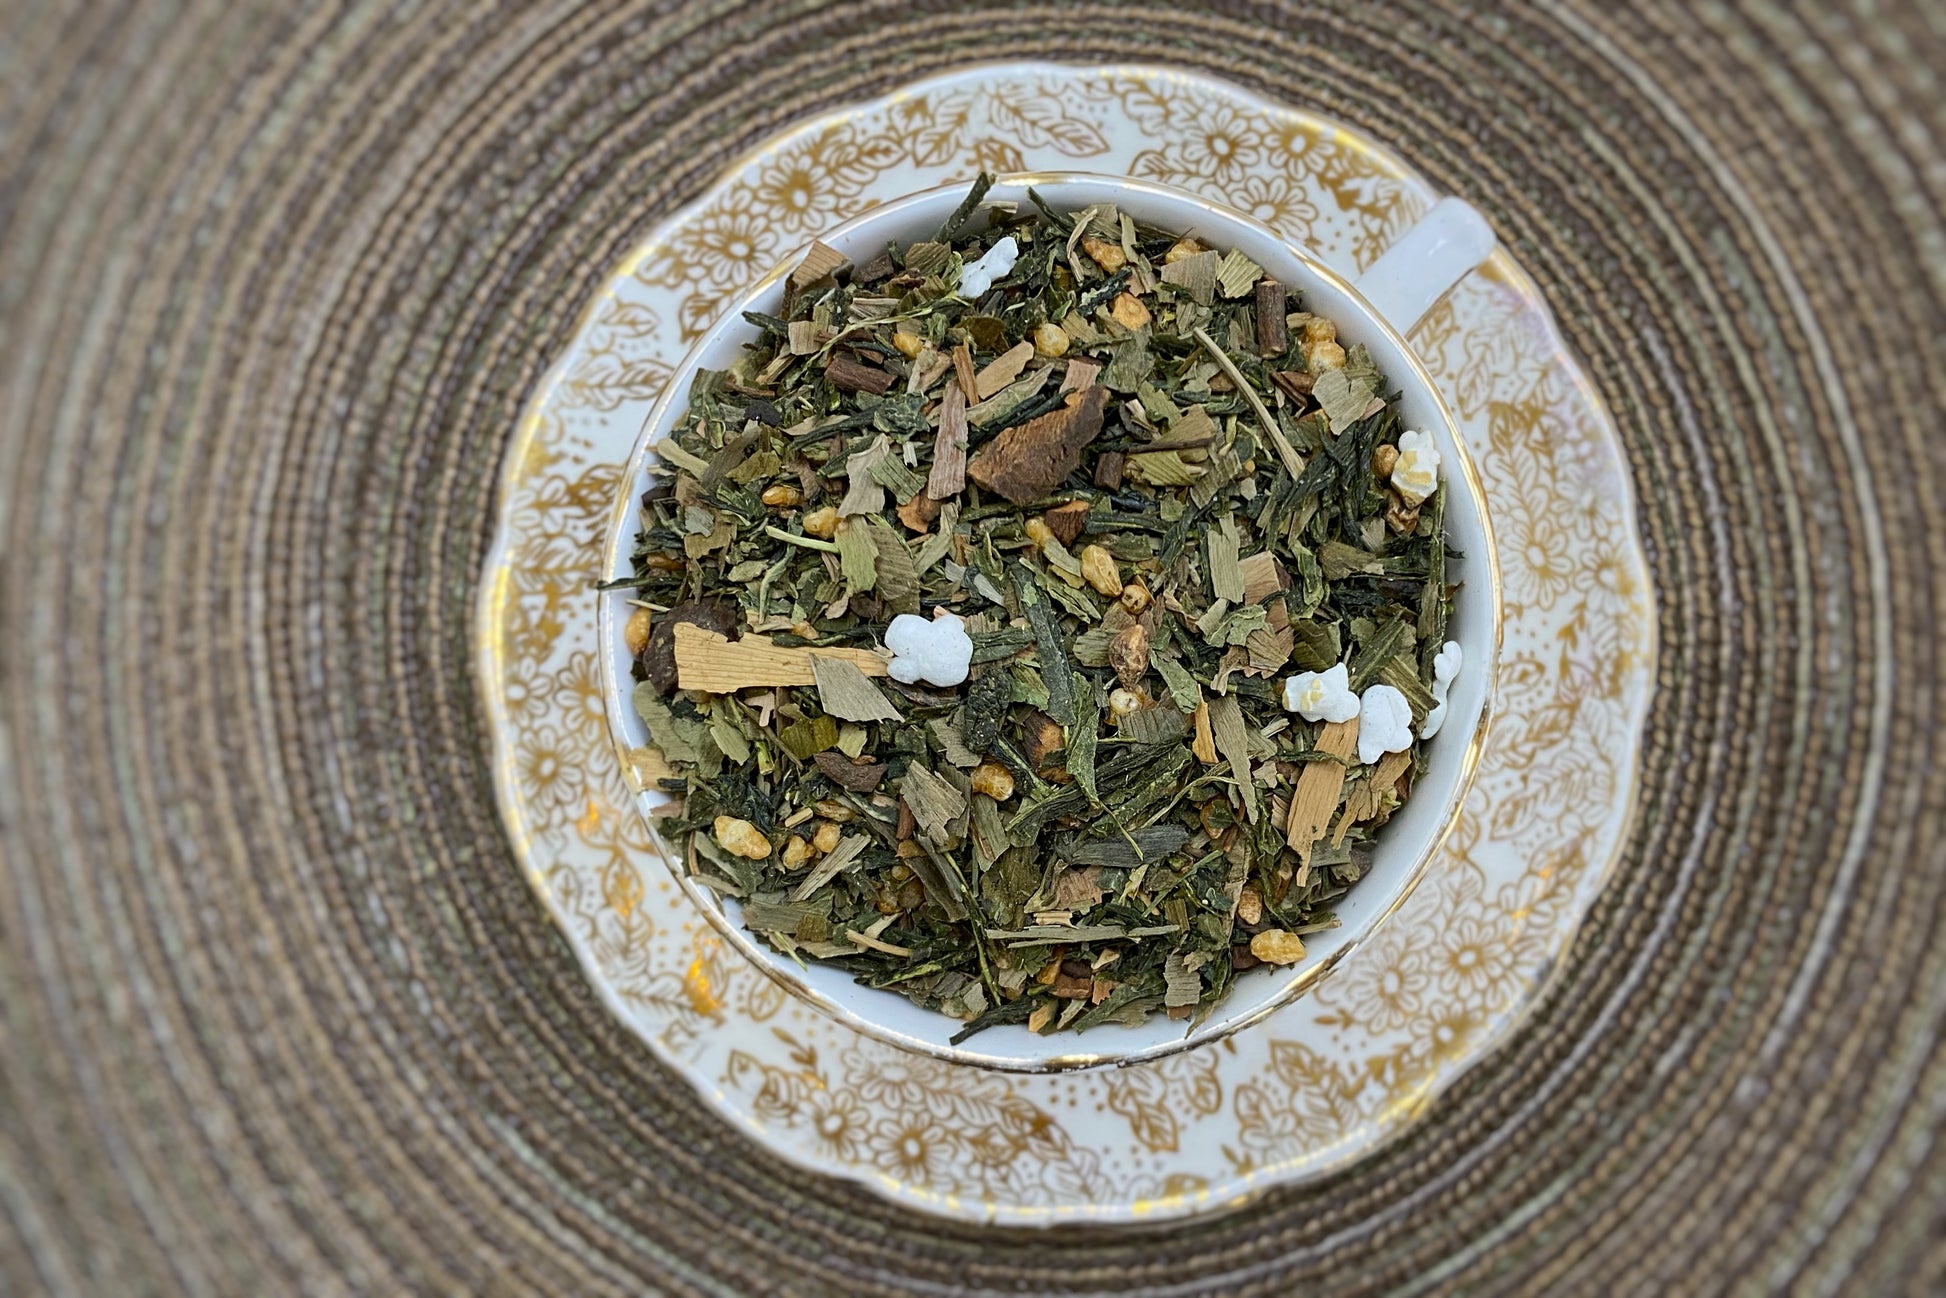 A teacup full of leaves